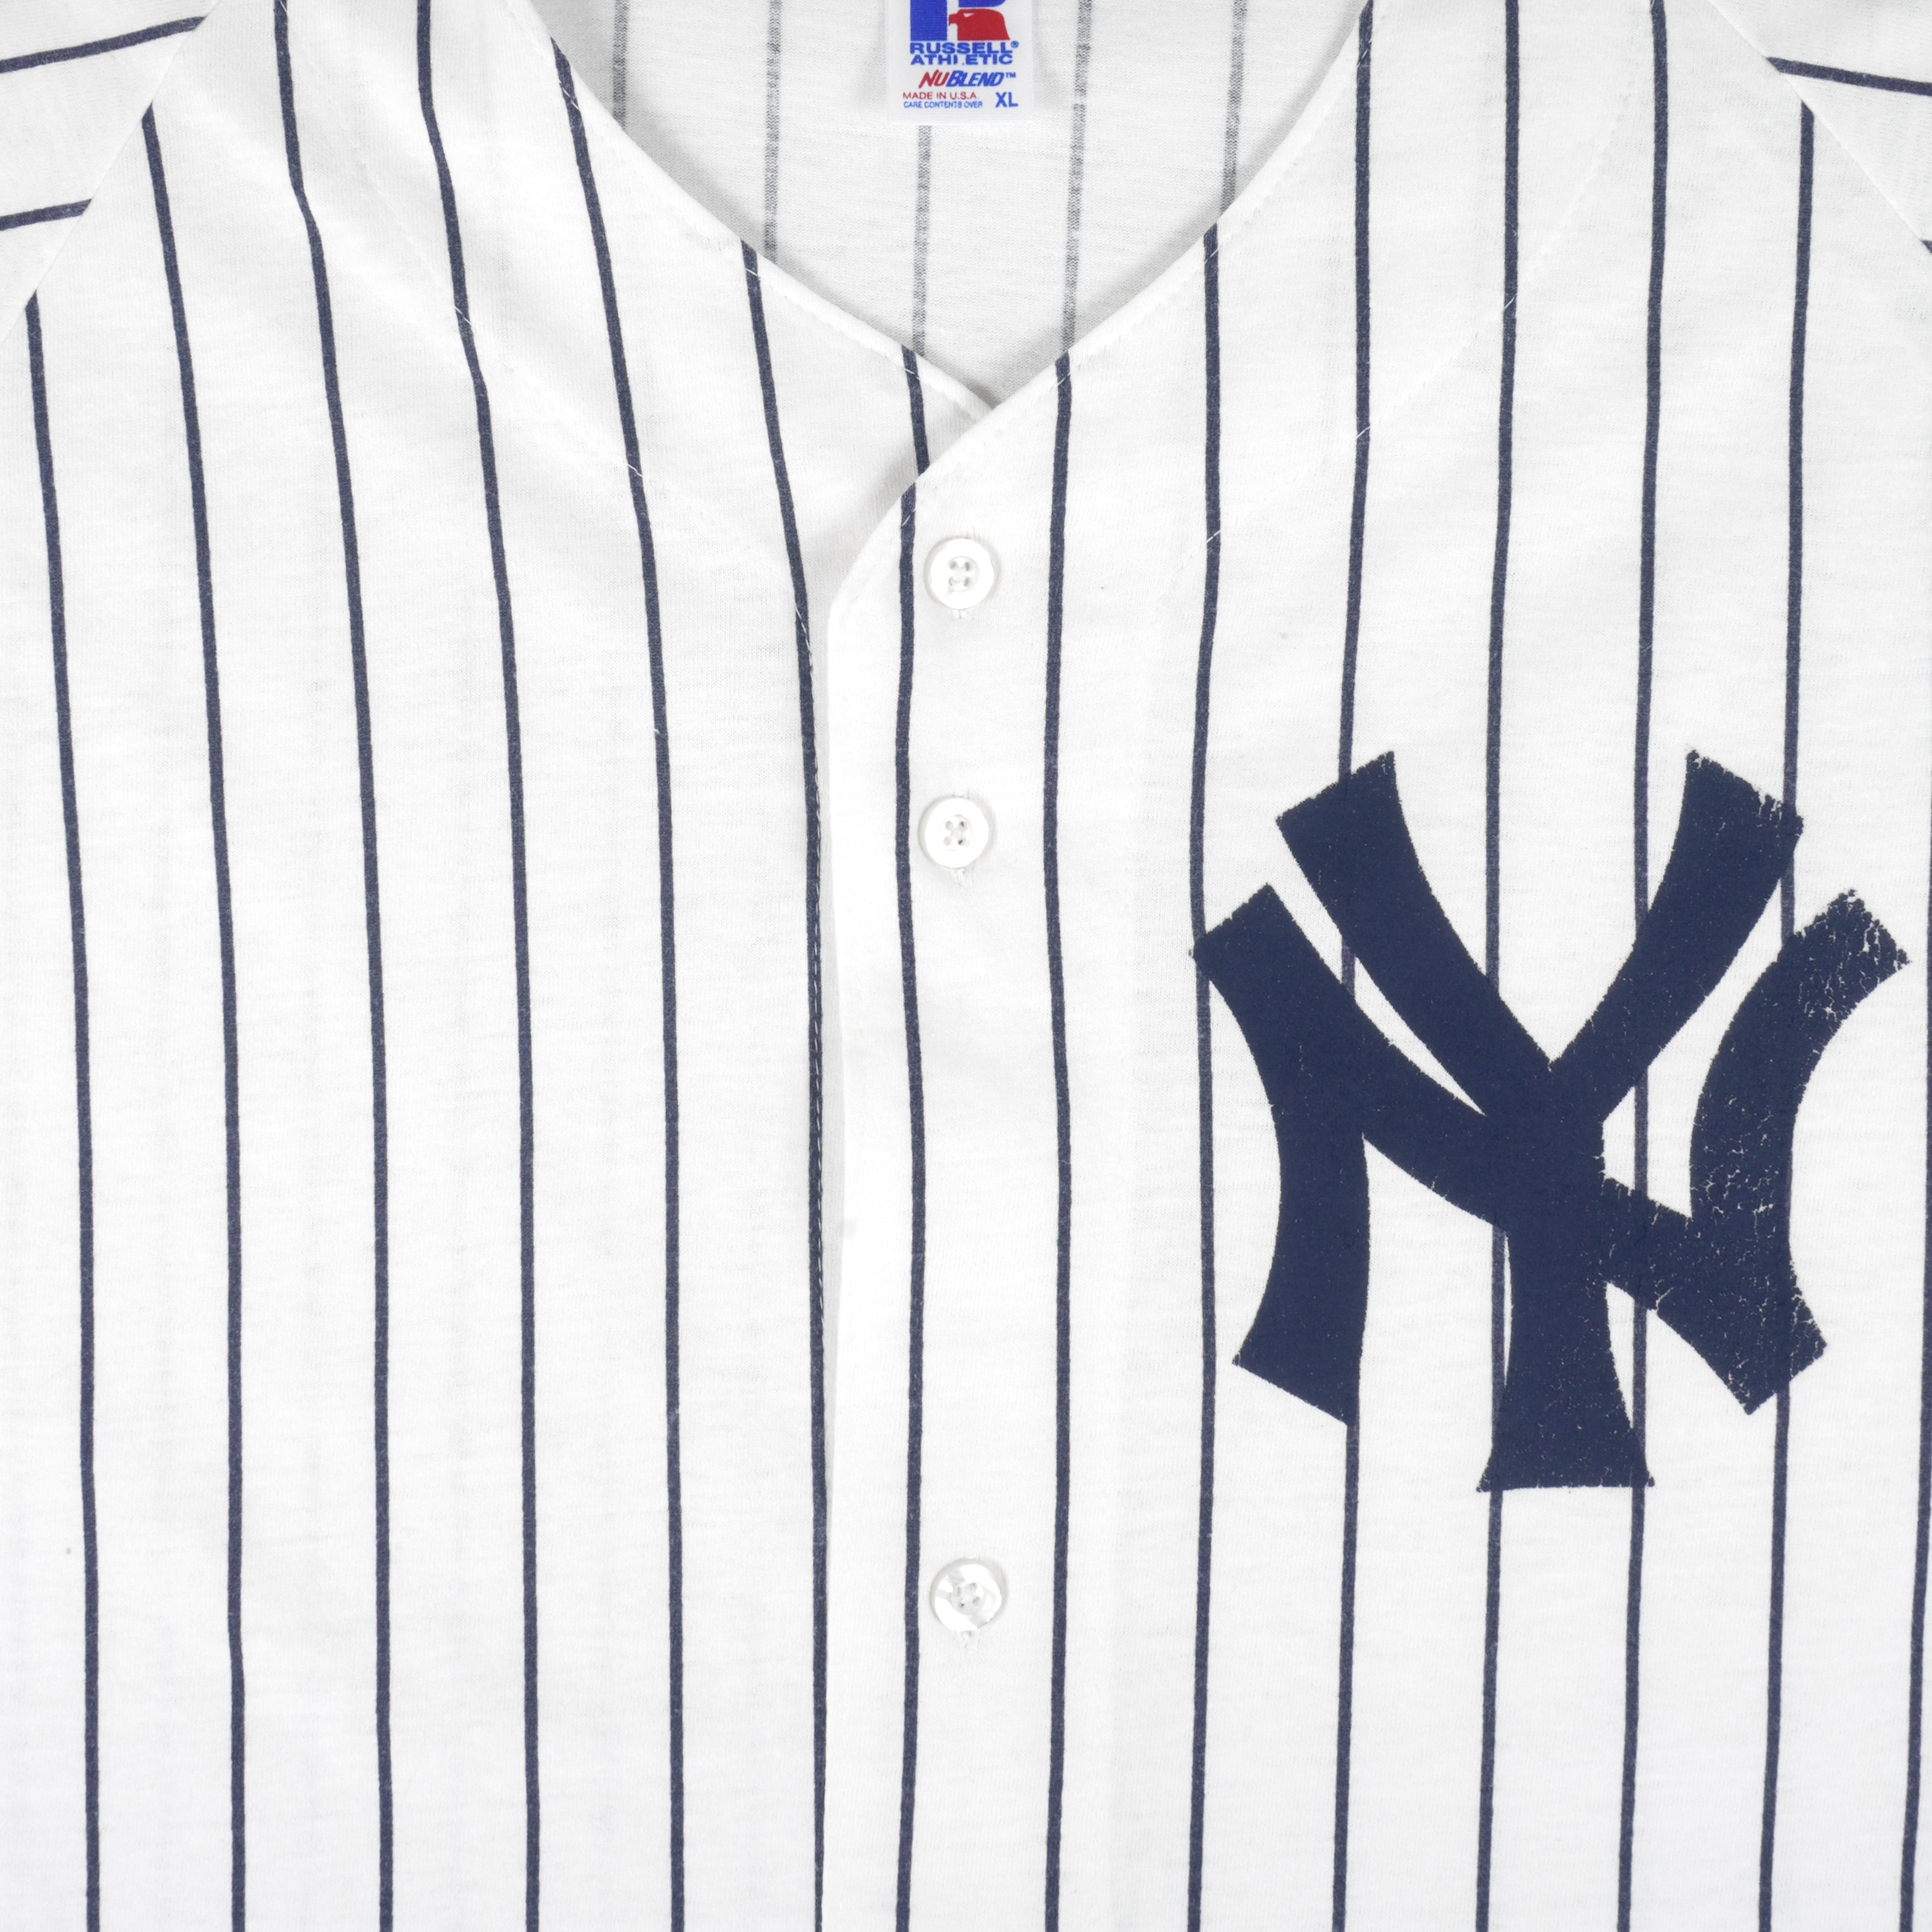 RUSSELL ATHLETIC NEW YORK YANKEES MLB BASEBALL JERSEY SZ: L